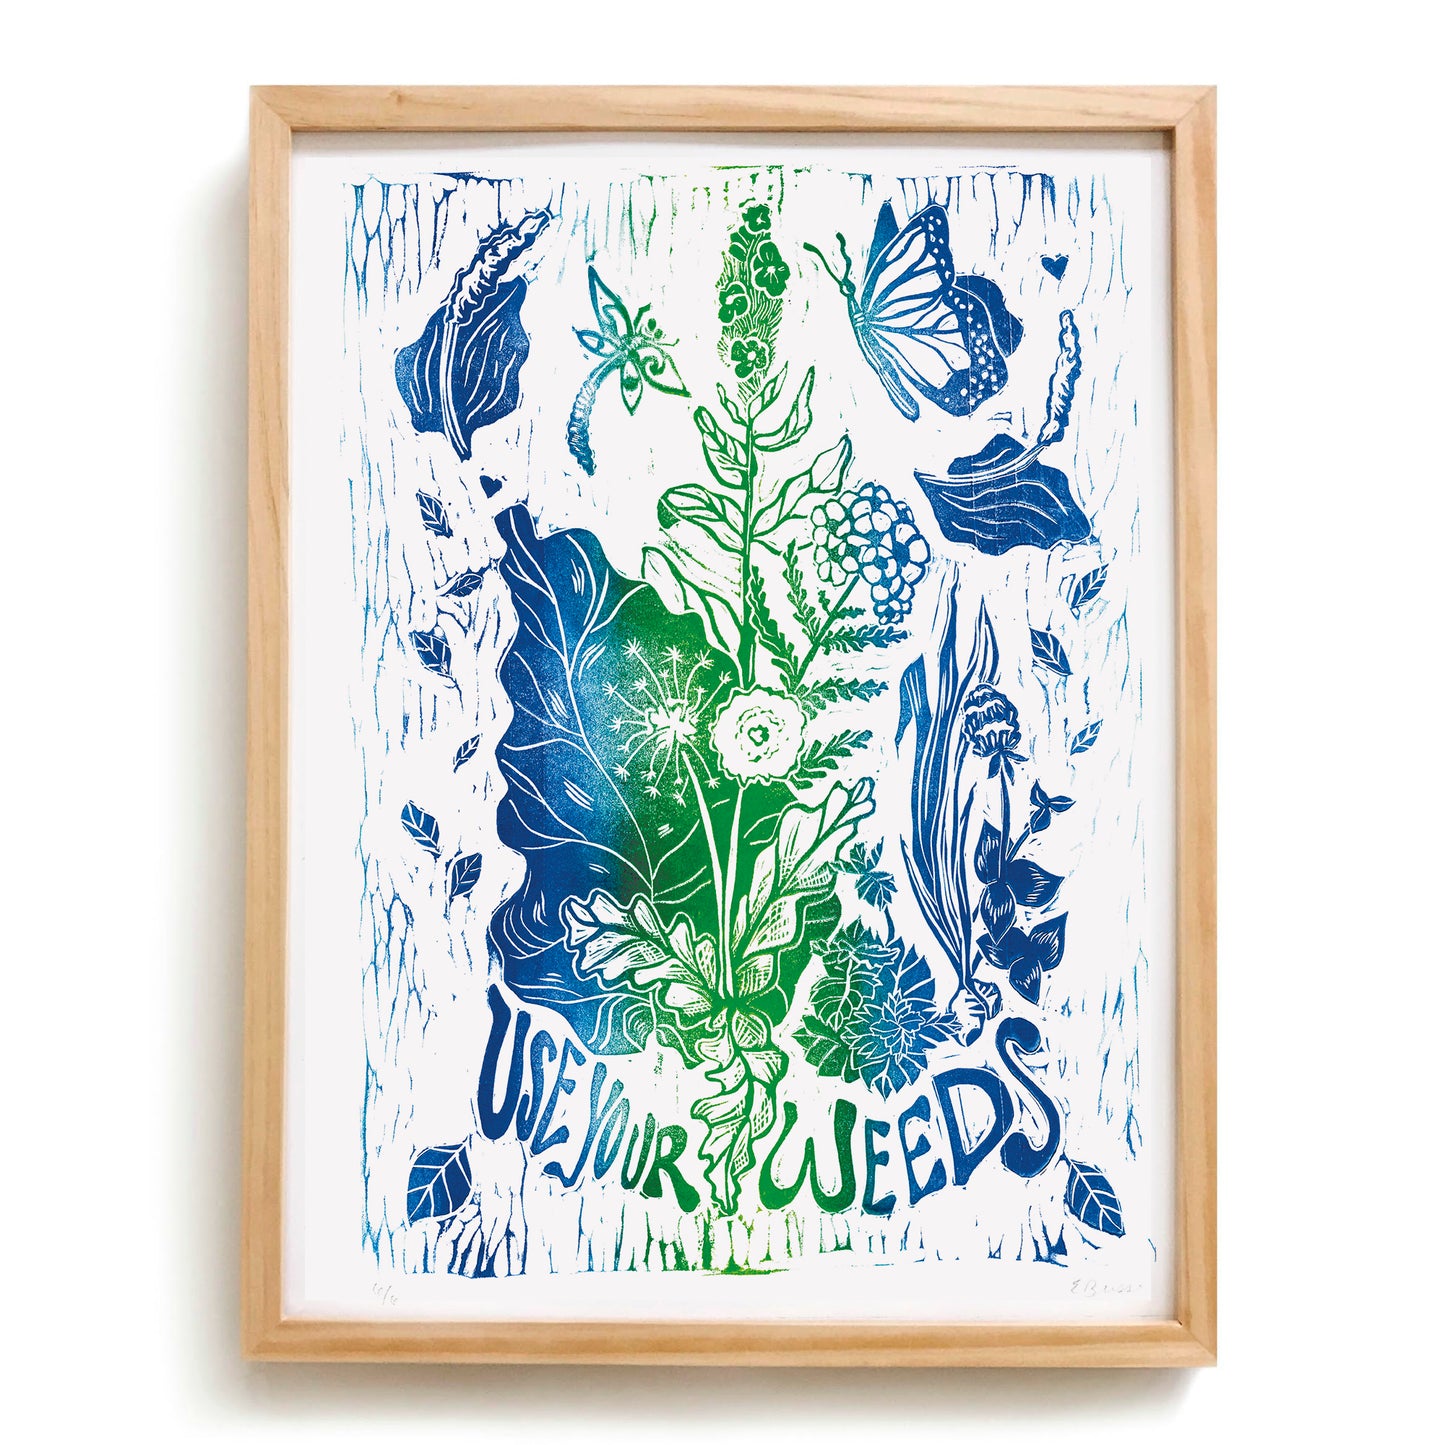 Use Your Weeds - Original Linocut Print